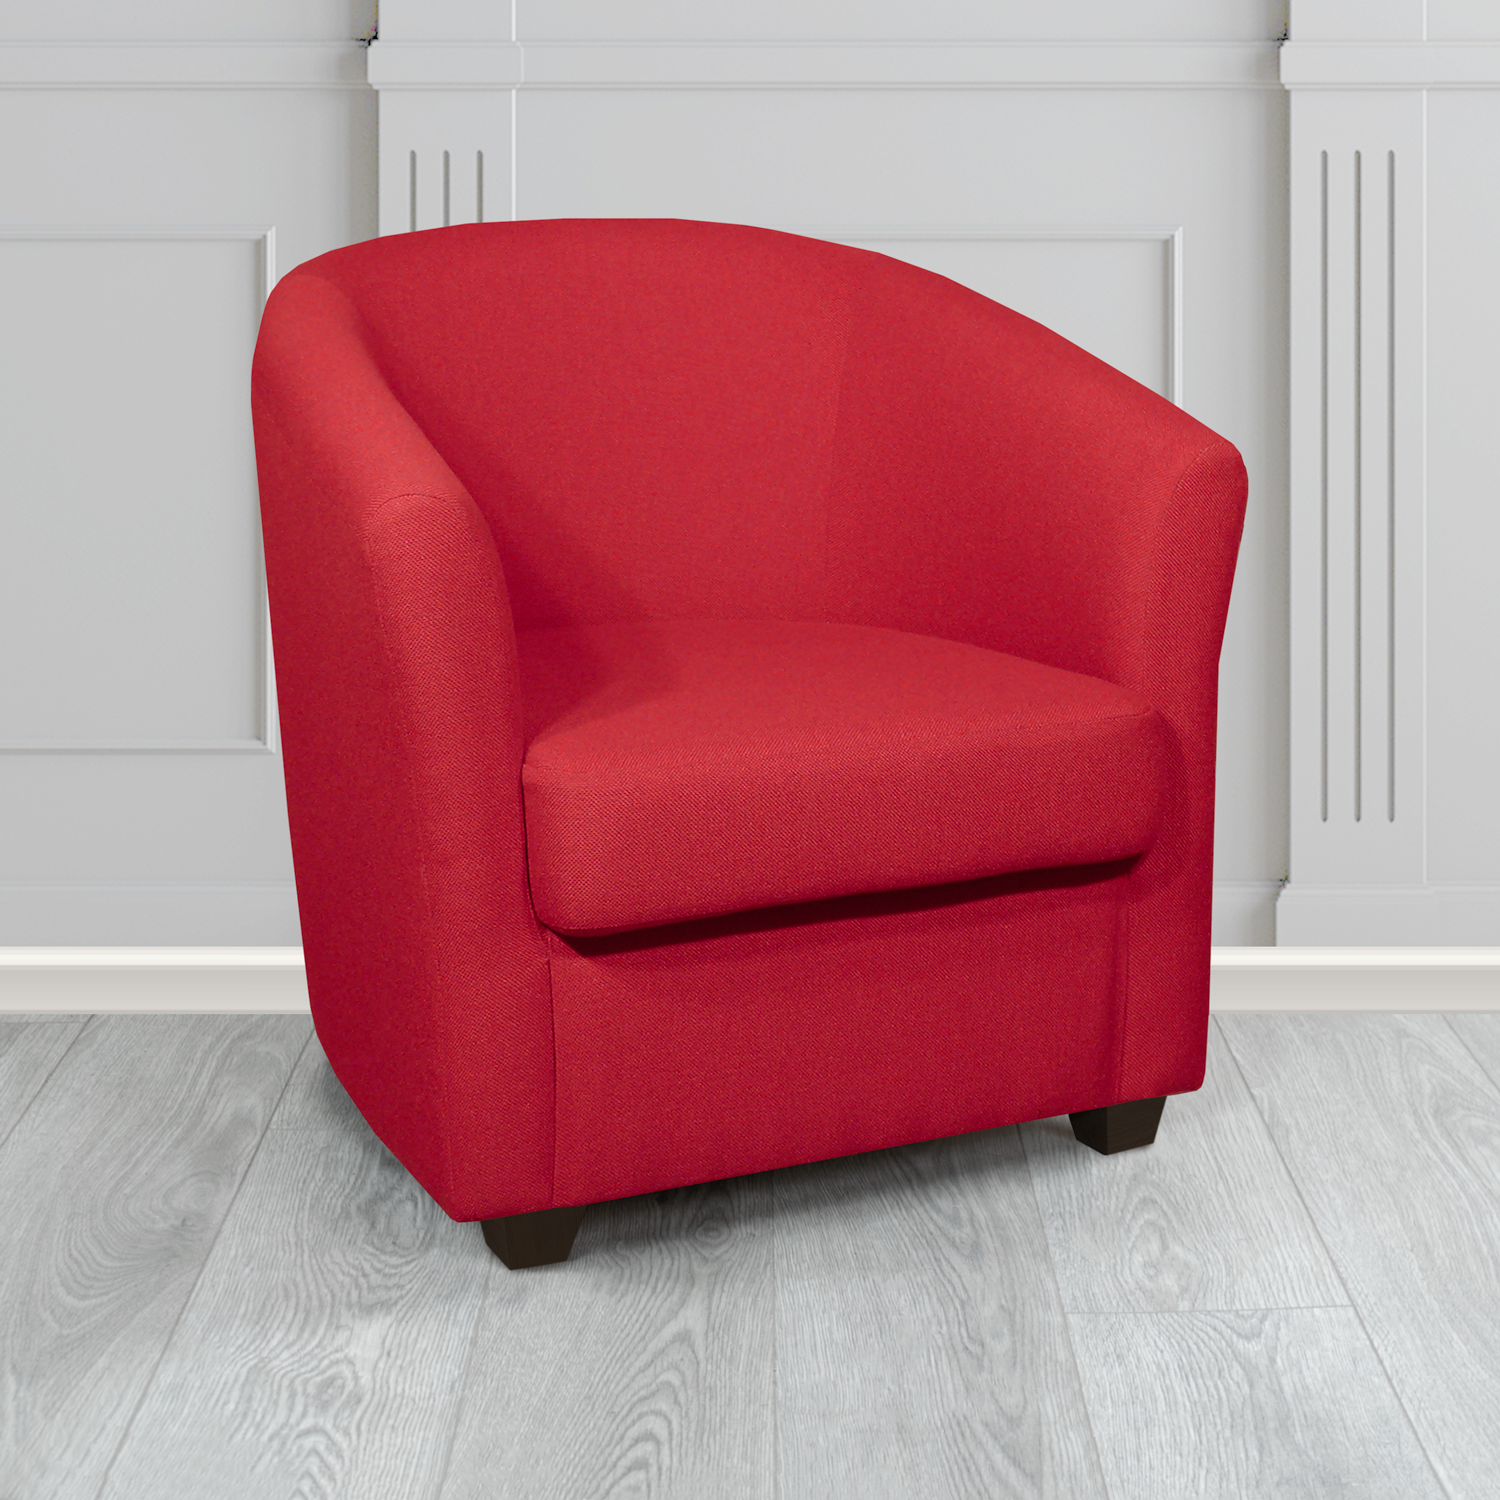 Cannes Tub Chair in Mainline Plus Red IF011 Crib 5 Fabric - The Tub Chair Shop